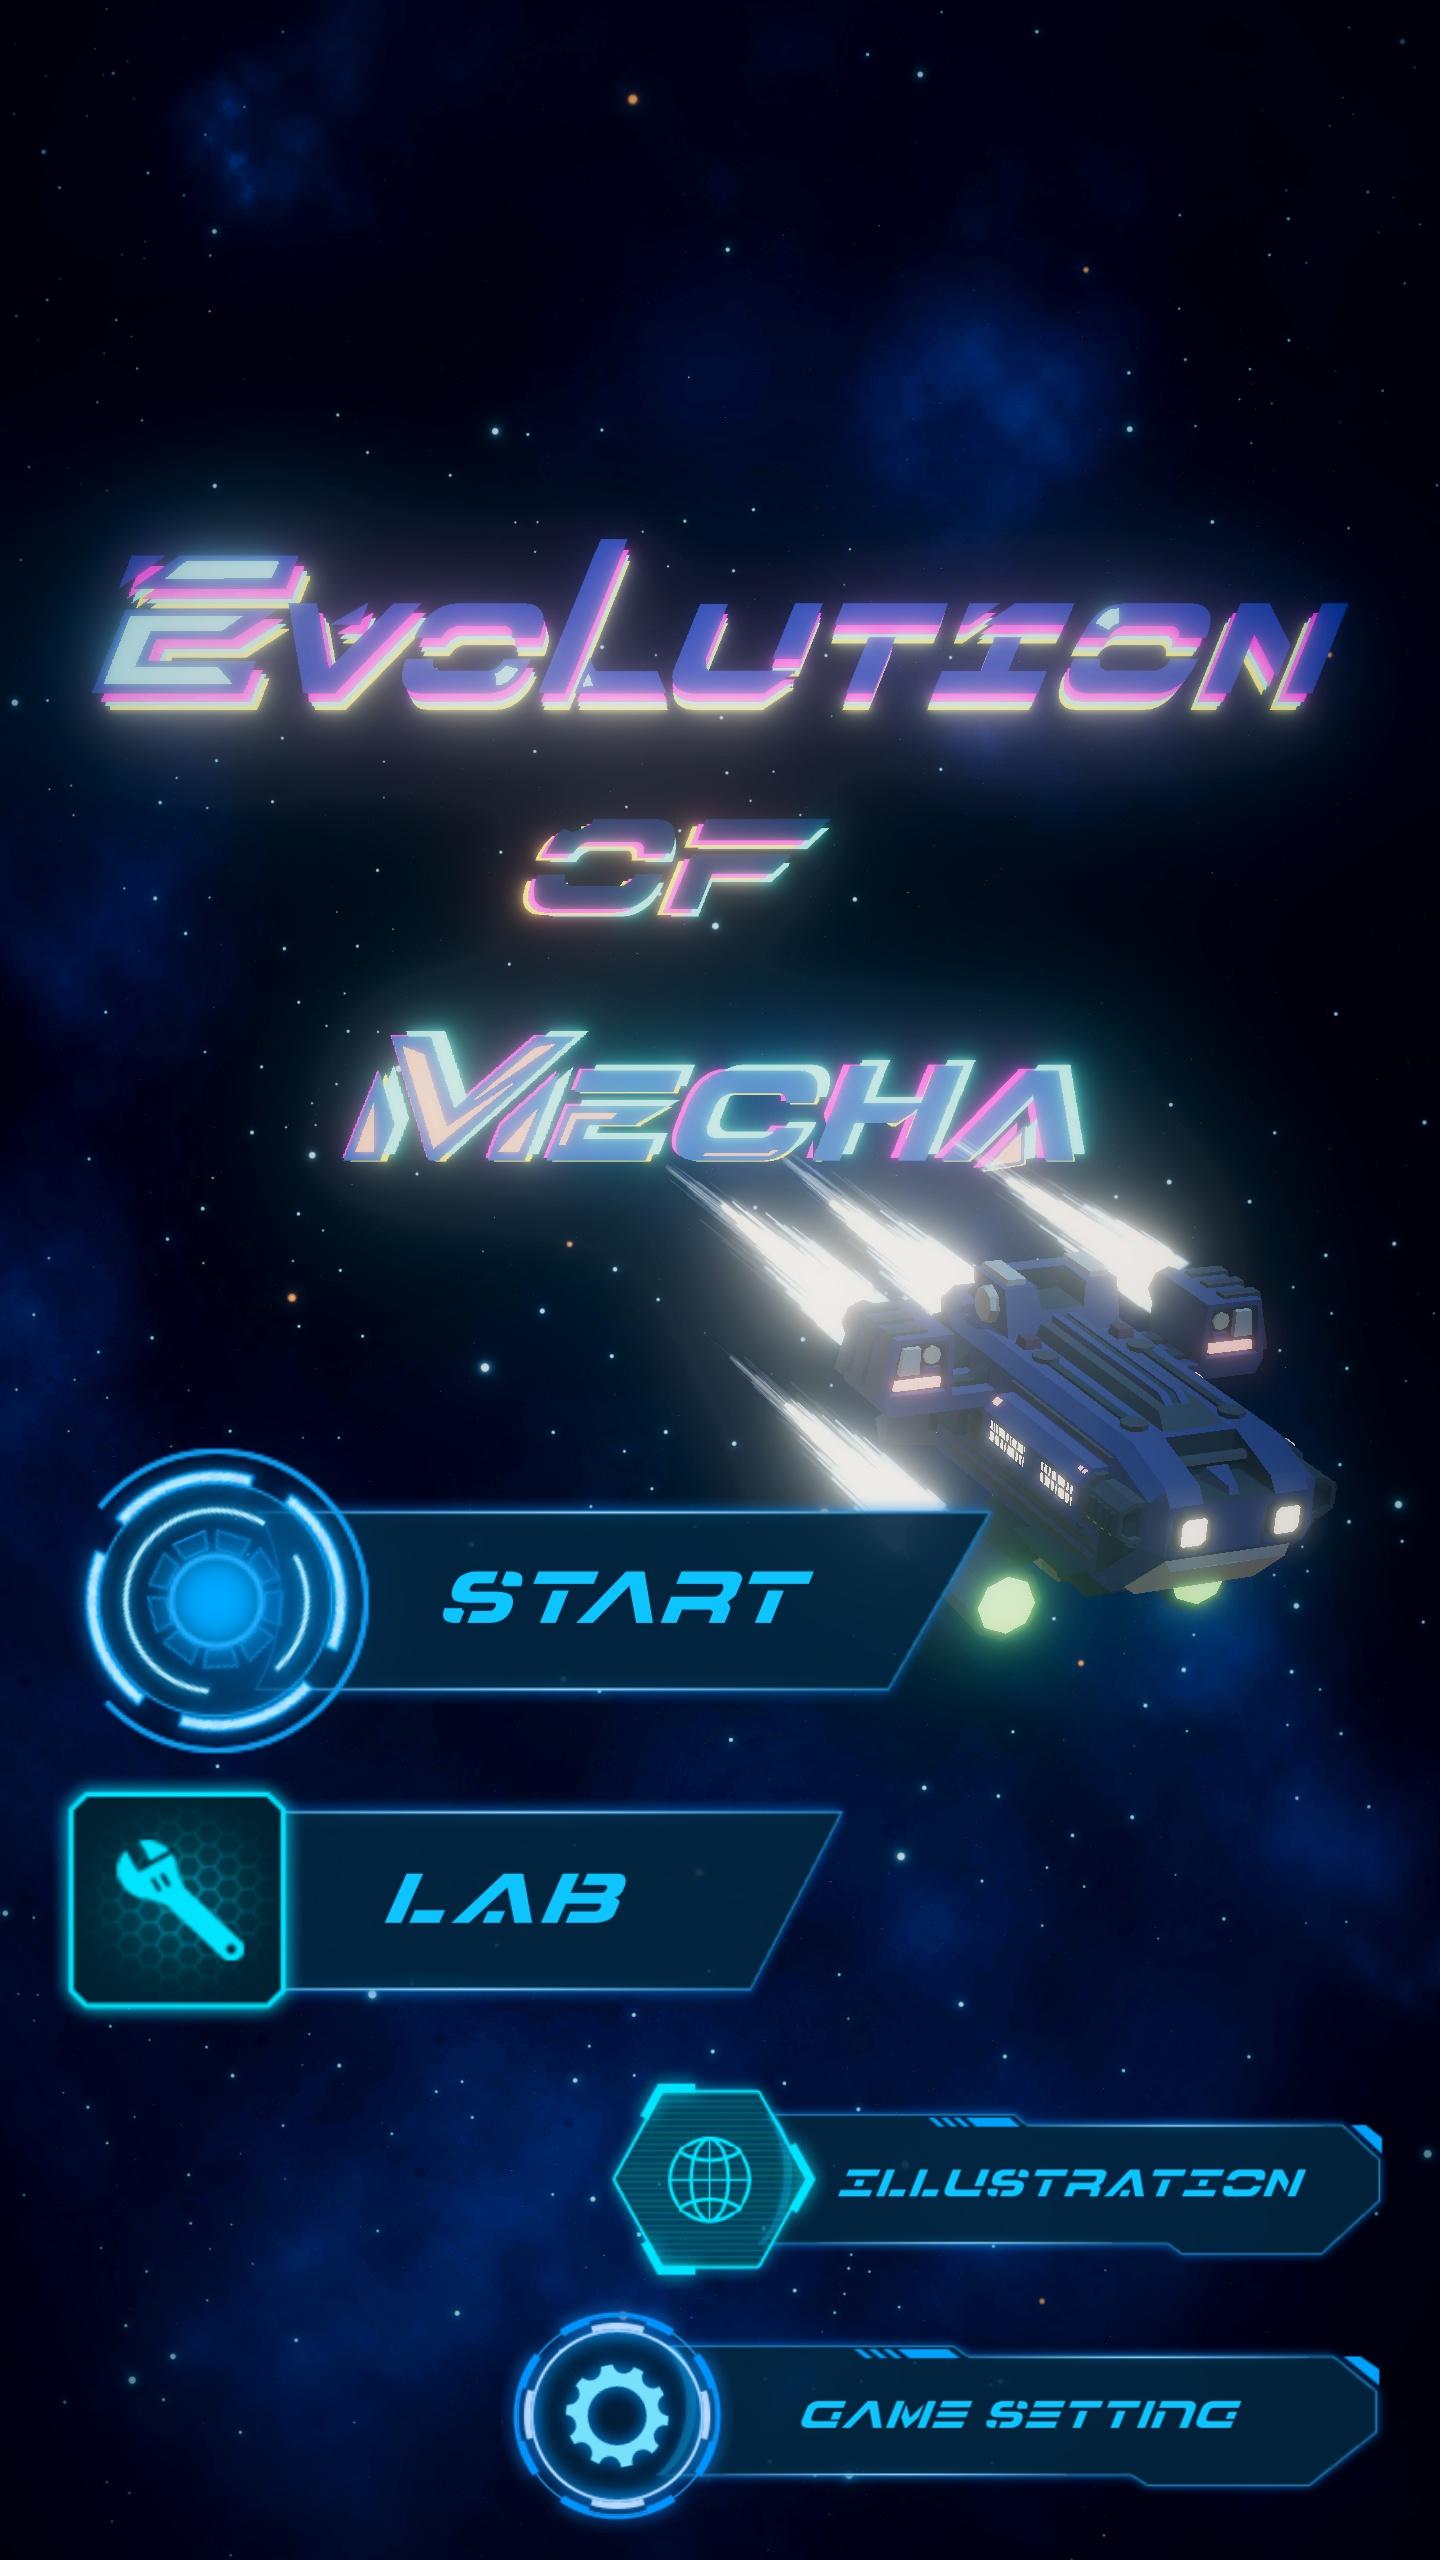 Screenshot 1 of macchina dell'evoluzione 0.461